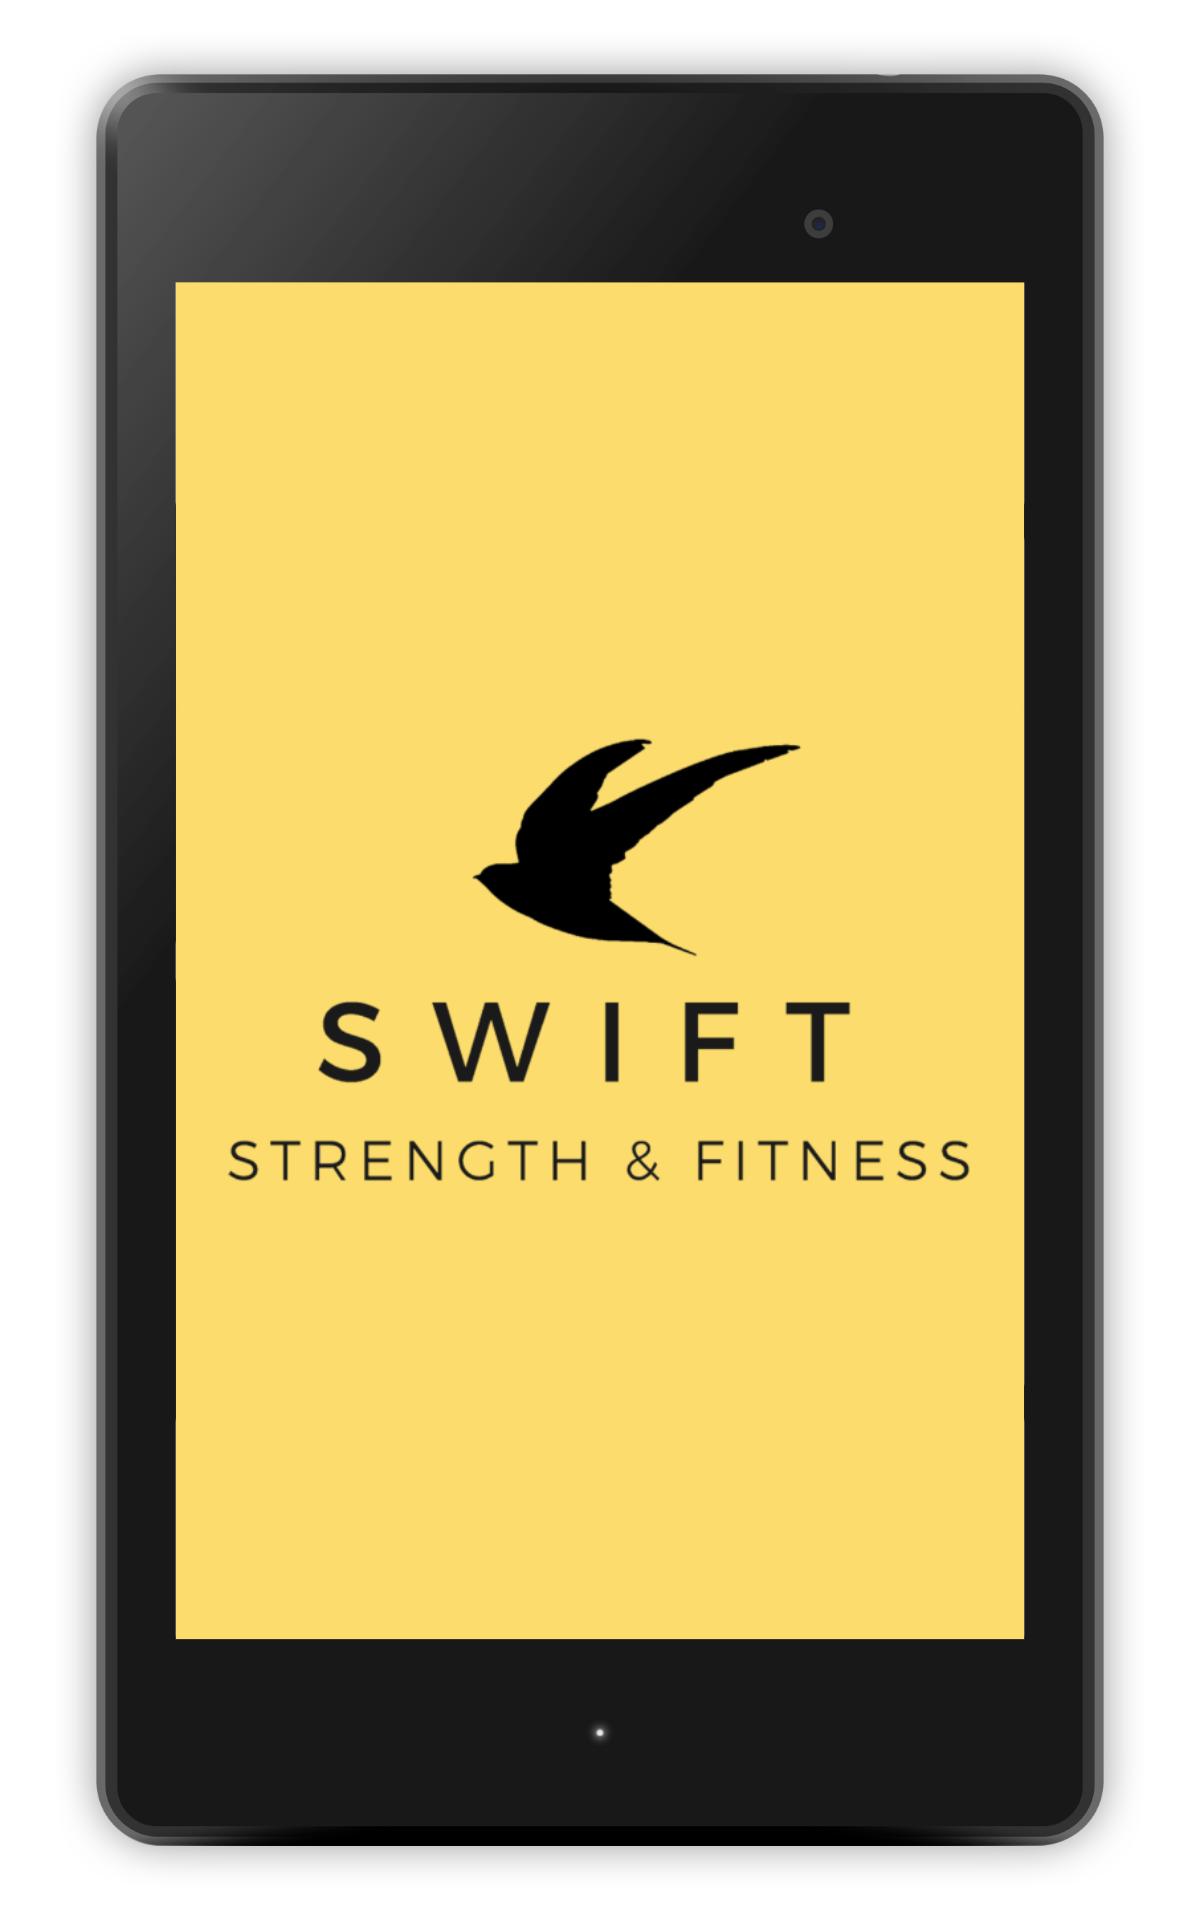 SWIFT Strength & Fitness 4.7.2 Screenshot 11